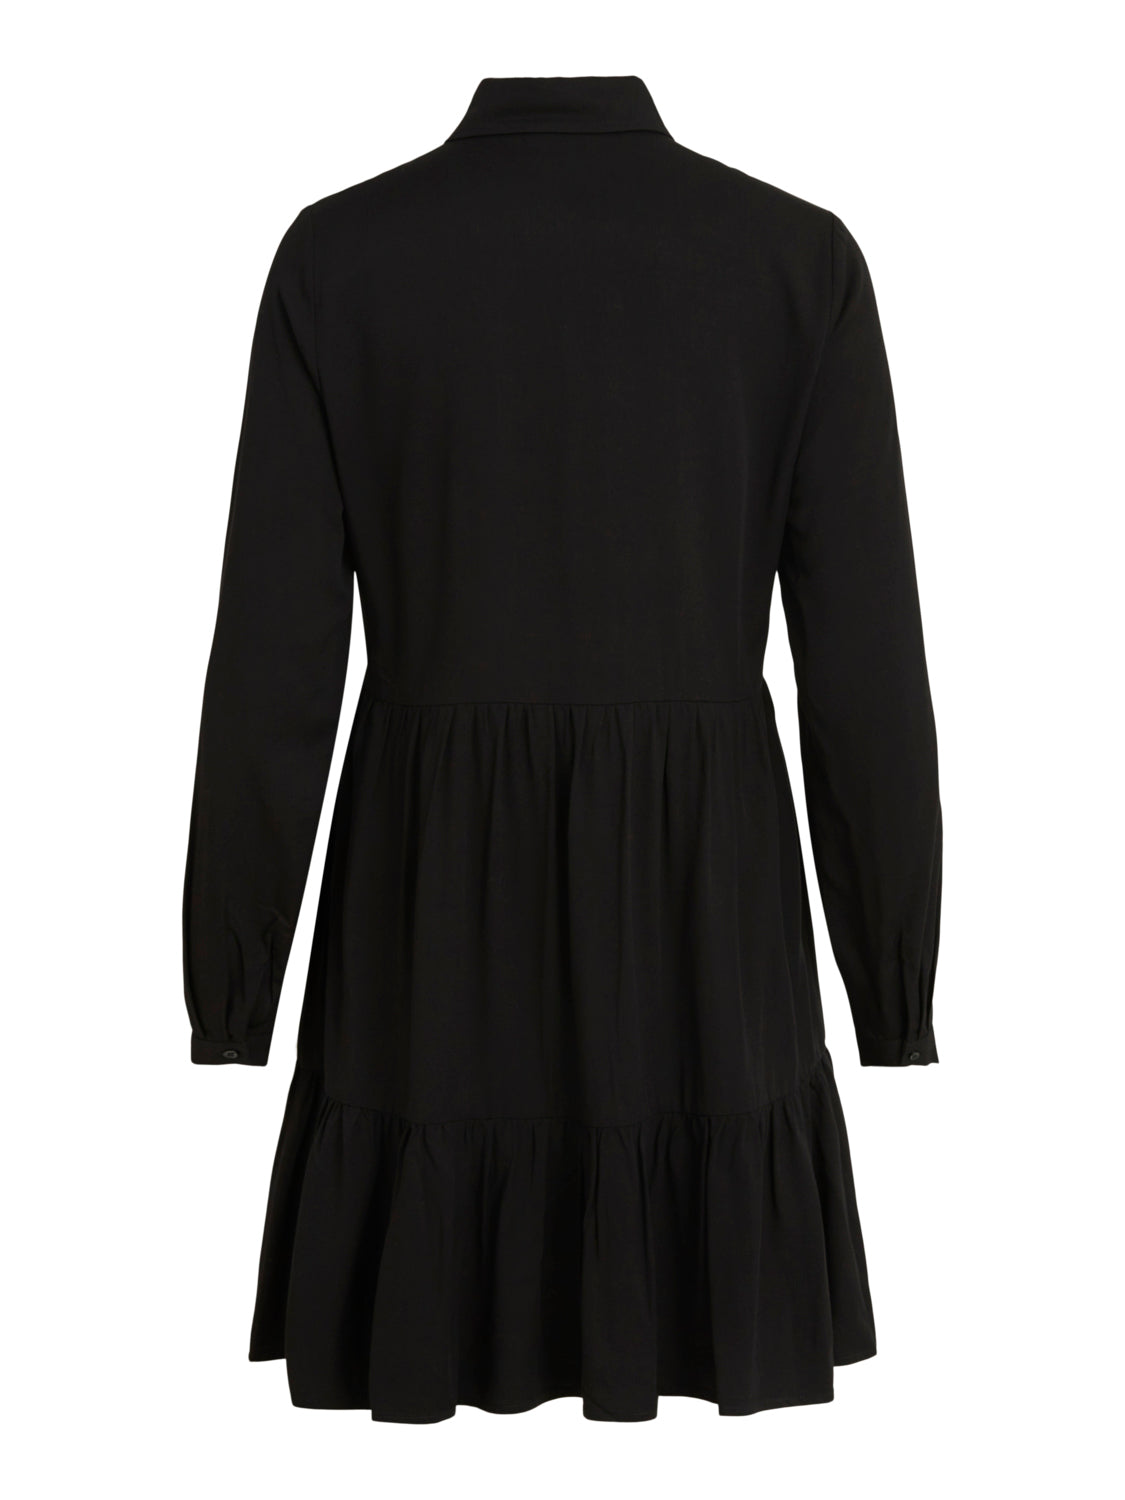 VIMOROSE Dress - Black